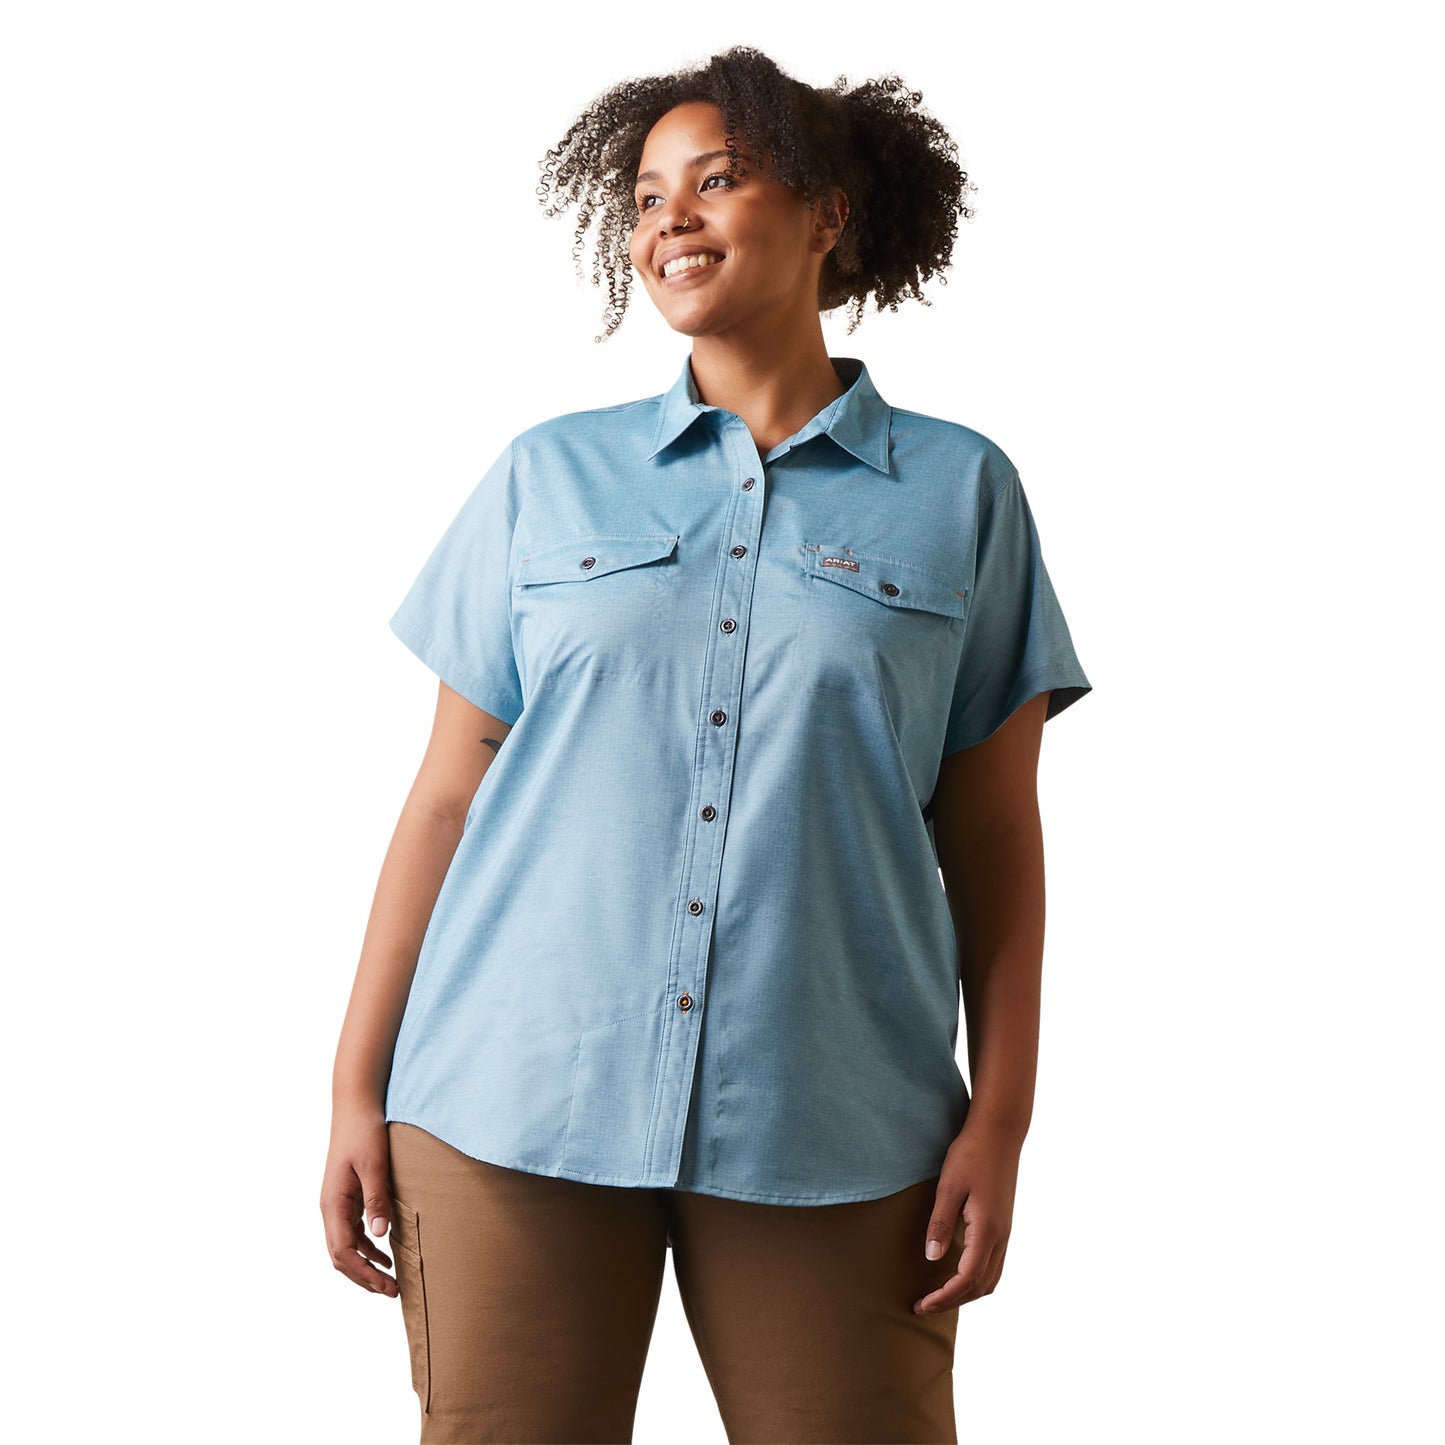 Ariat® Ladies Rebar Made Tough VentTEK DuraStretch™ Blue Shirt 10043773